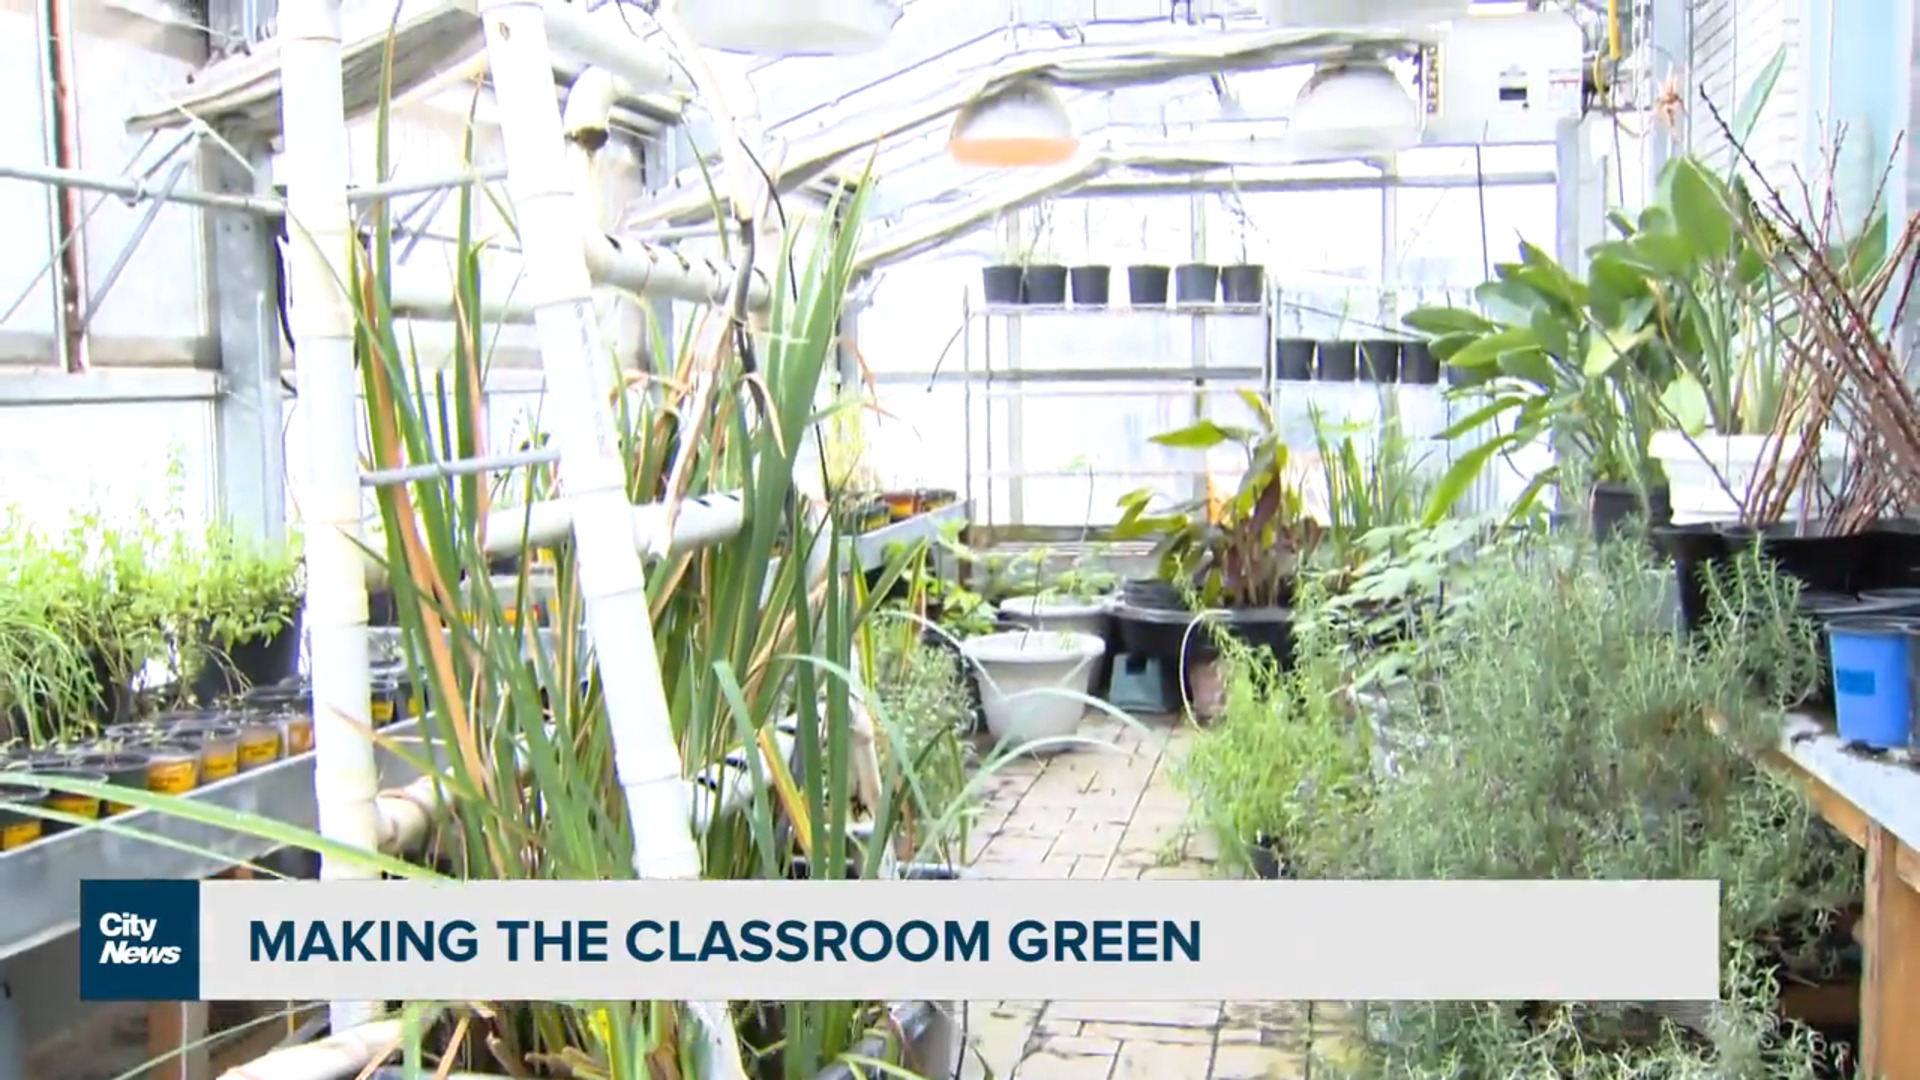 Don Mills school program shows students a greener way forward